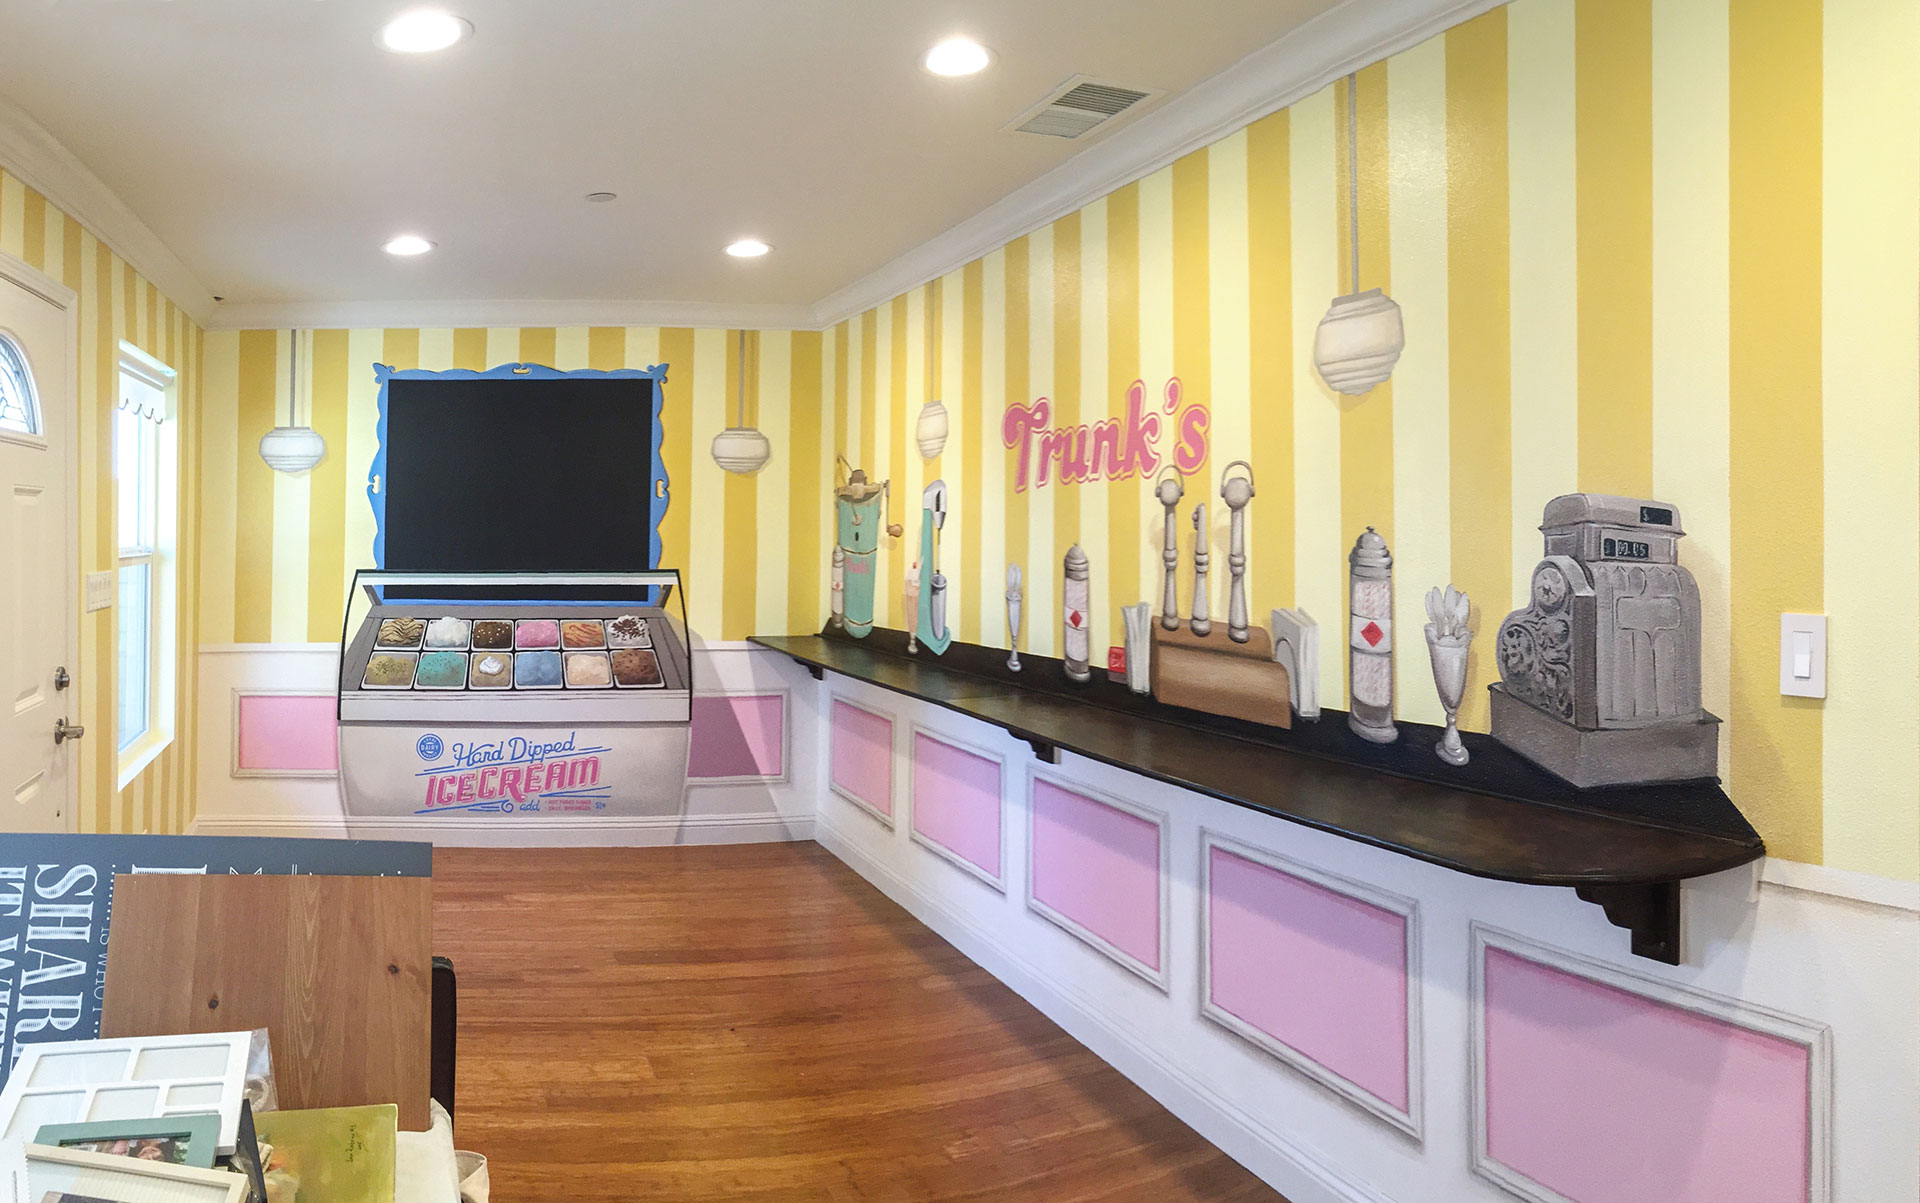  Trunk’s Ice Cream Parlor 